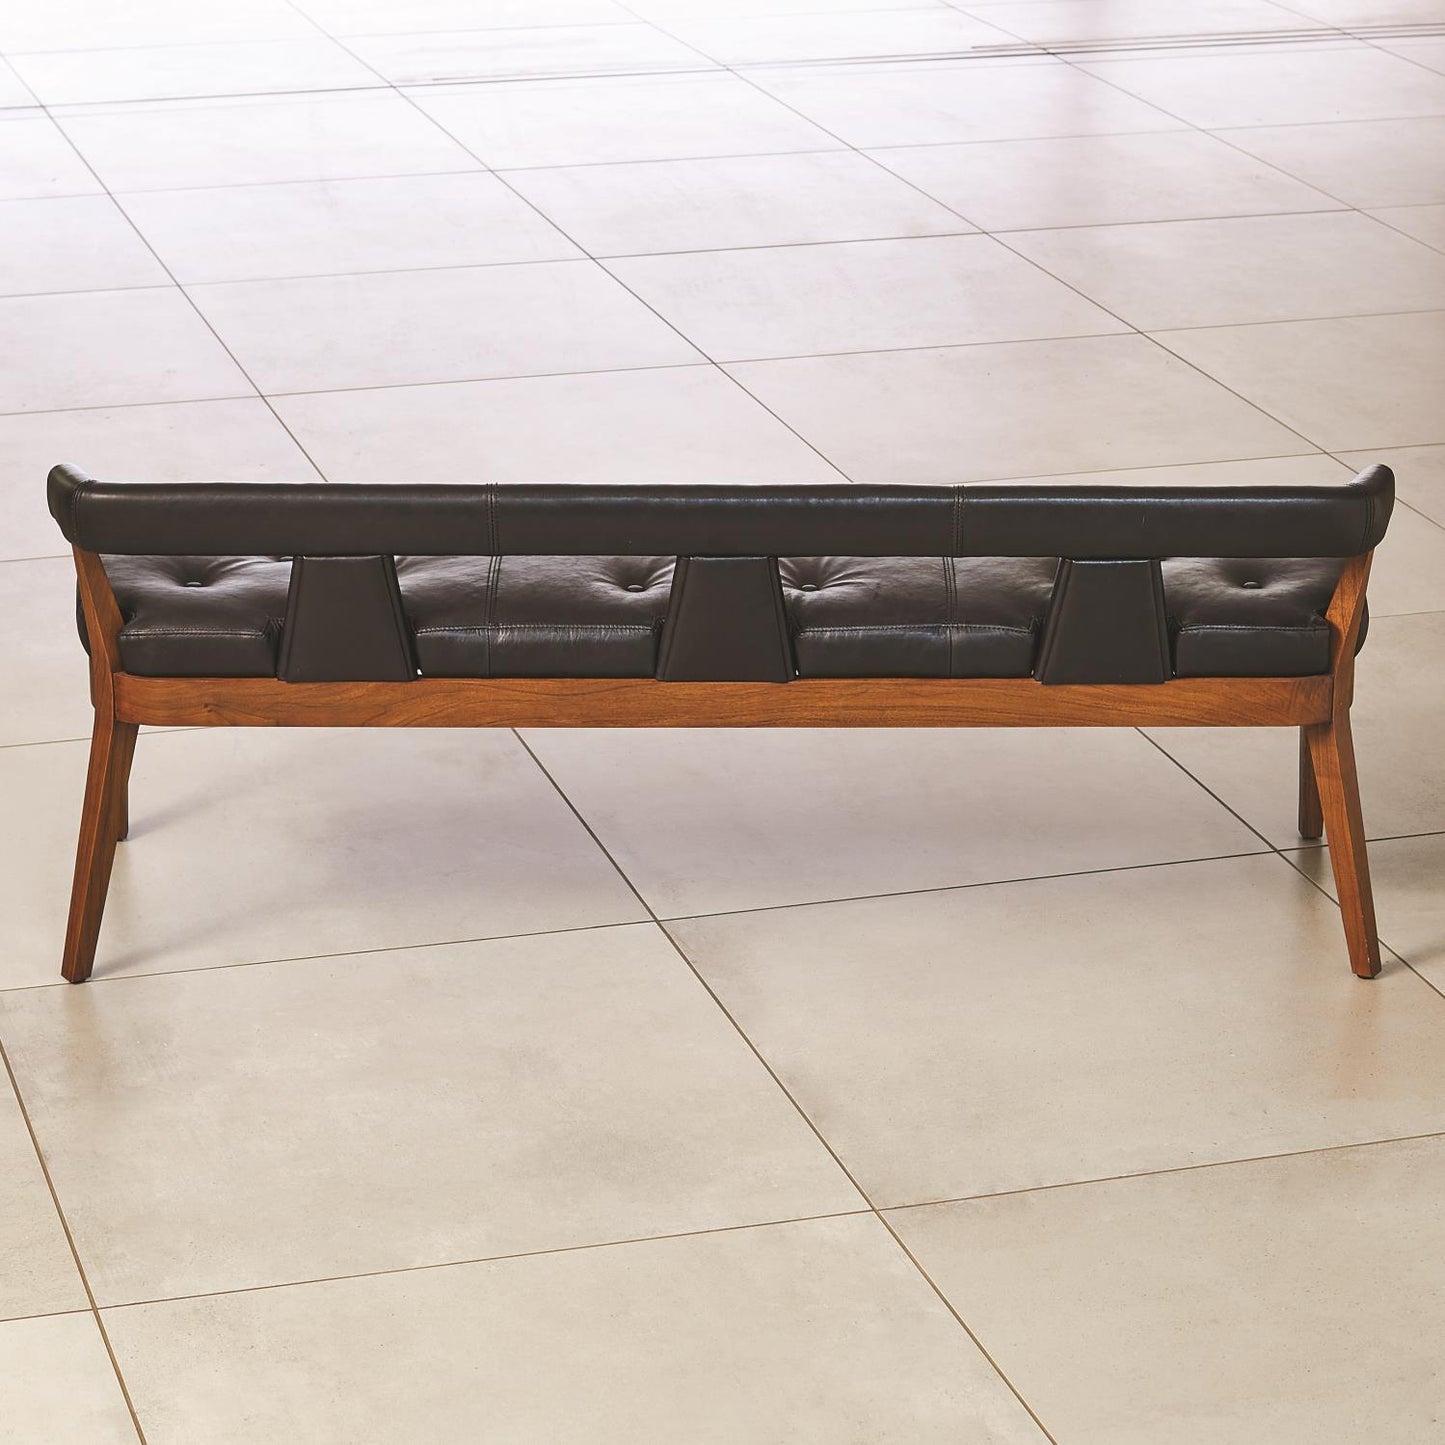 Moderno Bench - Black Marble Leather - Grats Decor Interior Design & Build Inc.